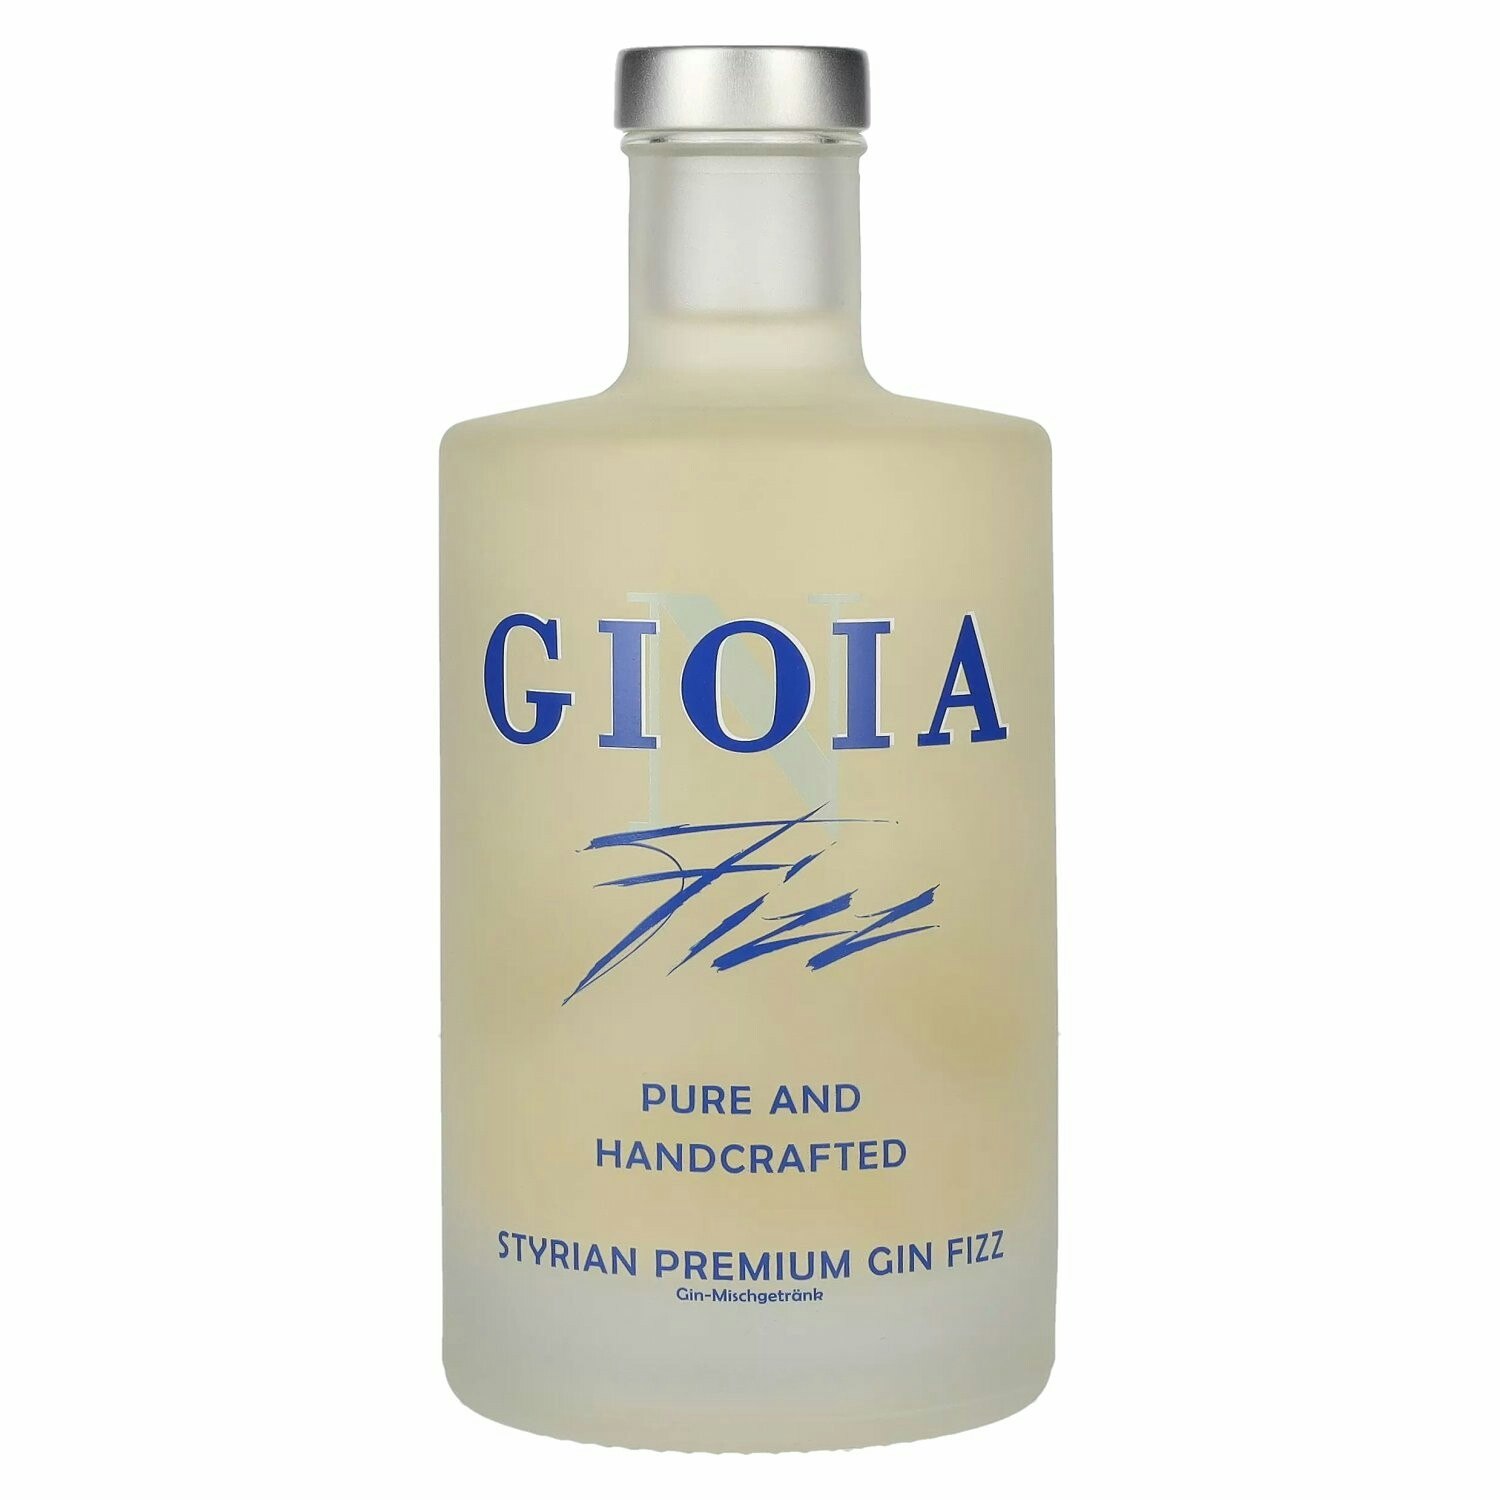 GIOIA Gin Fizz 23,7% Vol. 0,5l